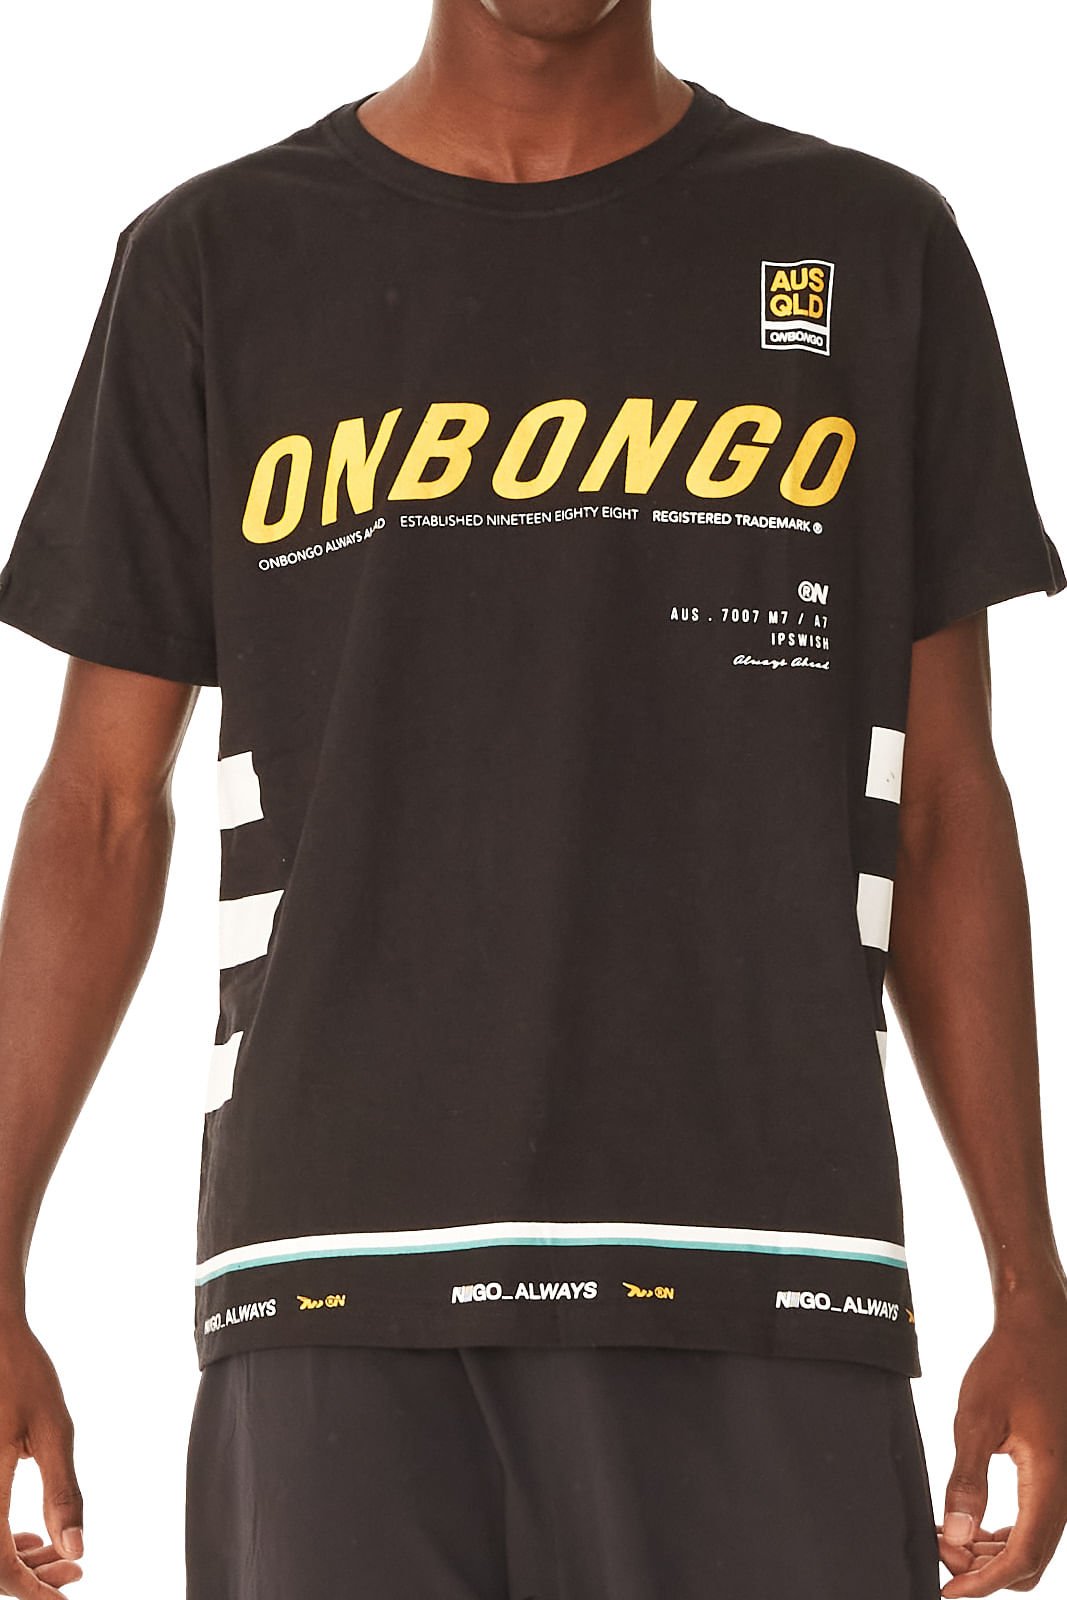 Camiseta Onbongo Estampada Preta Preto 3